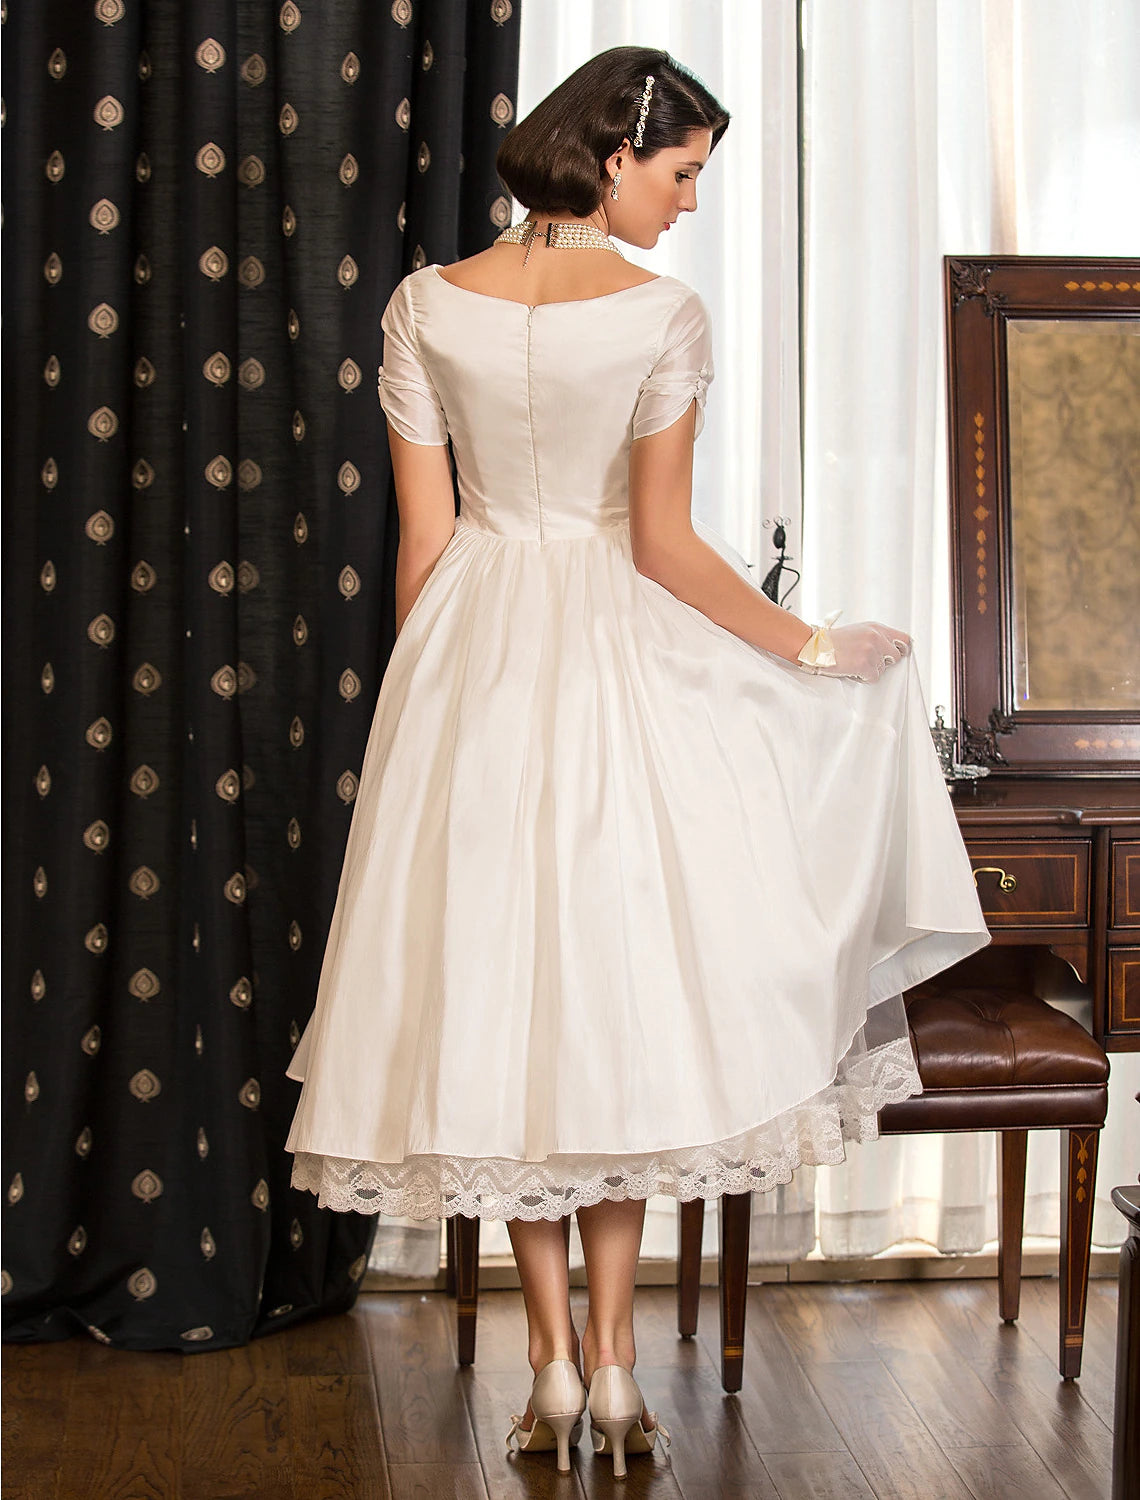 Reception Vintage 1940s / 1950s Little White Dresses Wedding Dresses A-Line V Neck Short Sleeve Tea Length Satin Bridal Gowns With Lace Criss Cross